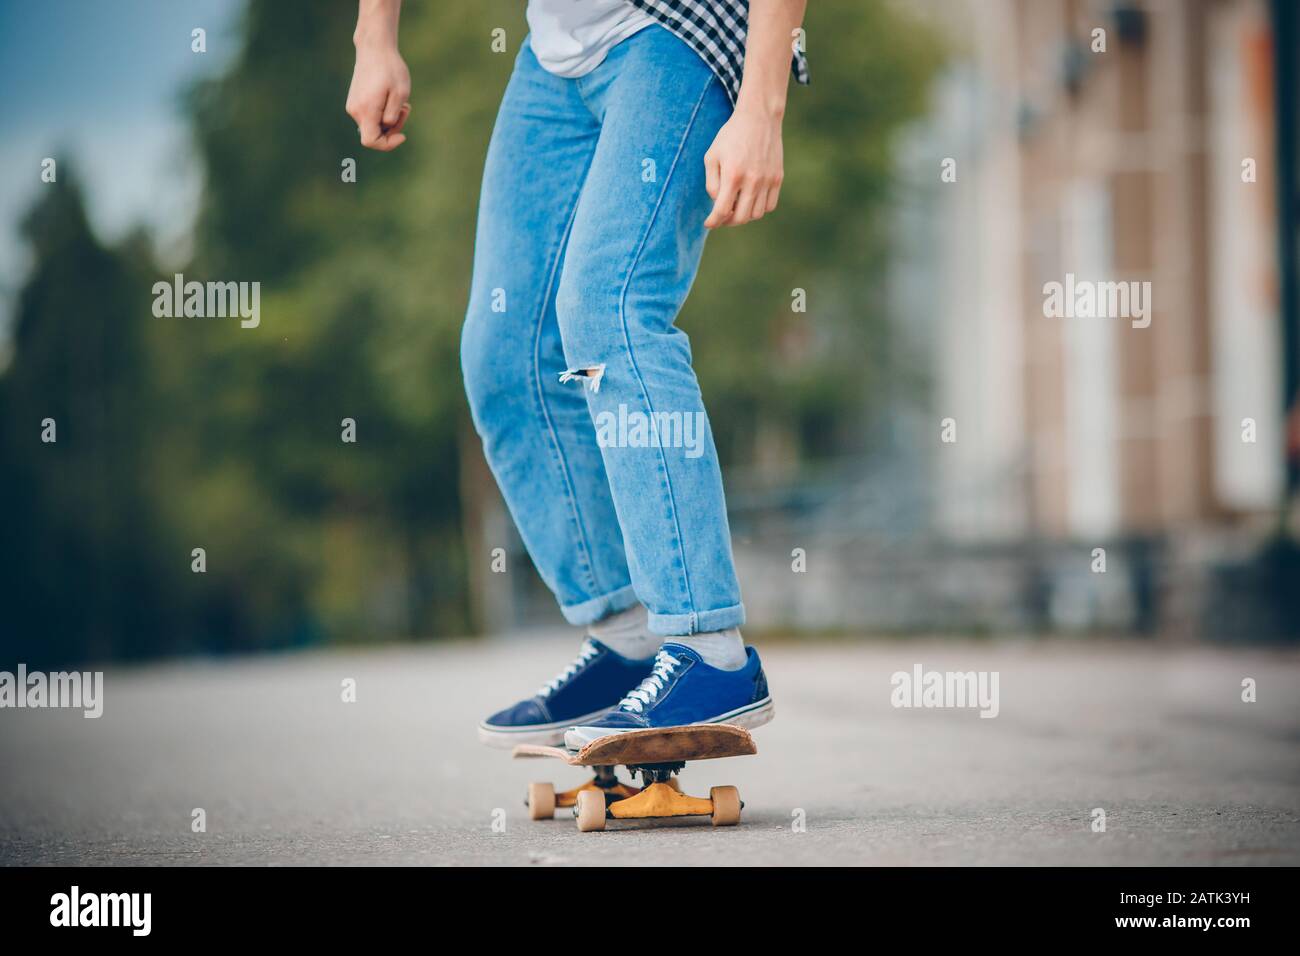 Skateboard man practices to ride on asphalt, learns tricks Stock Photo